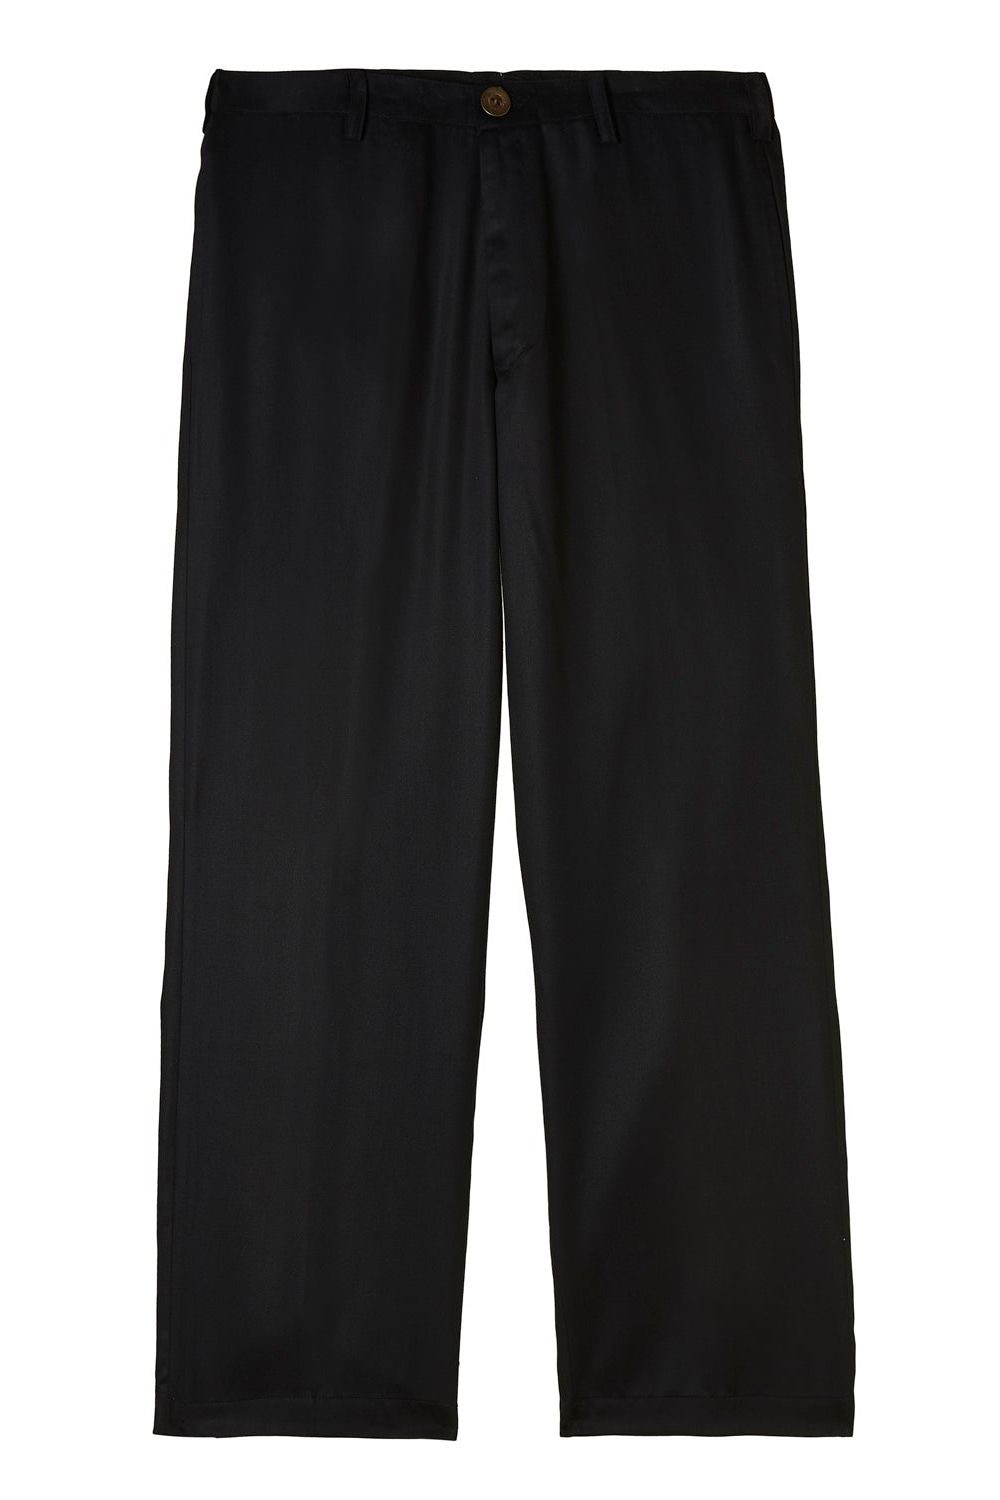 Elevated Essentials - Wide Fit Black Pants